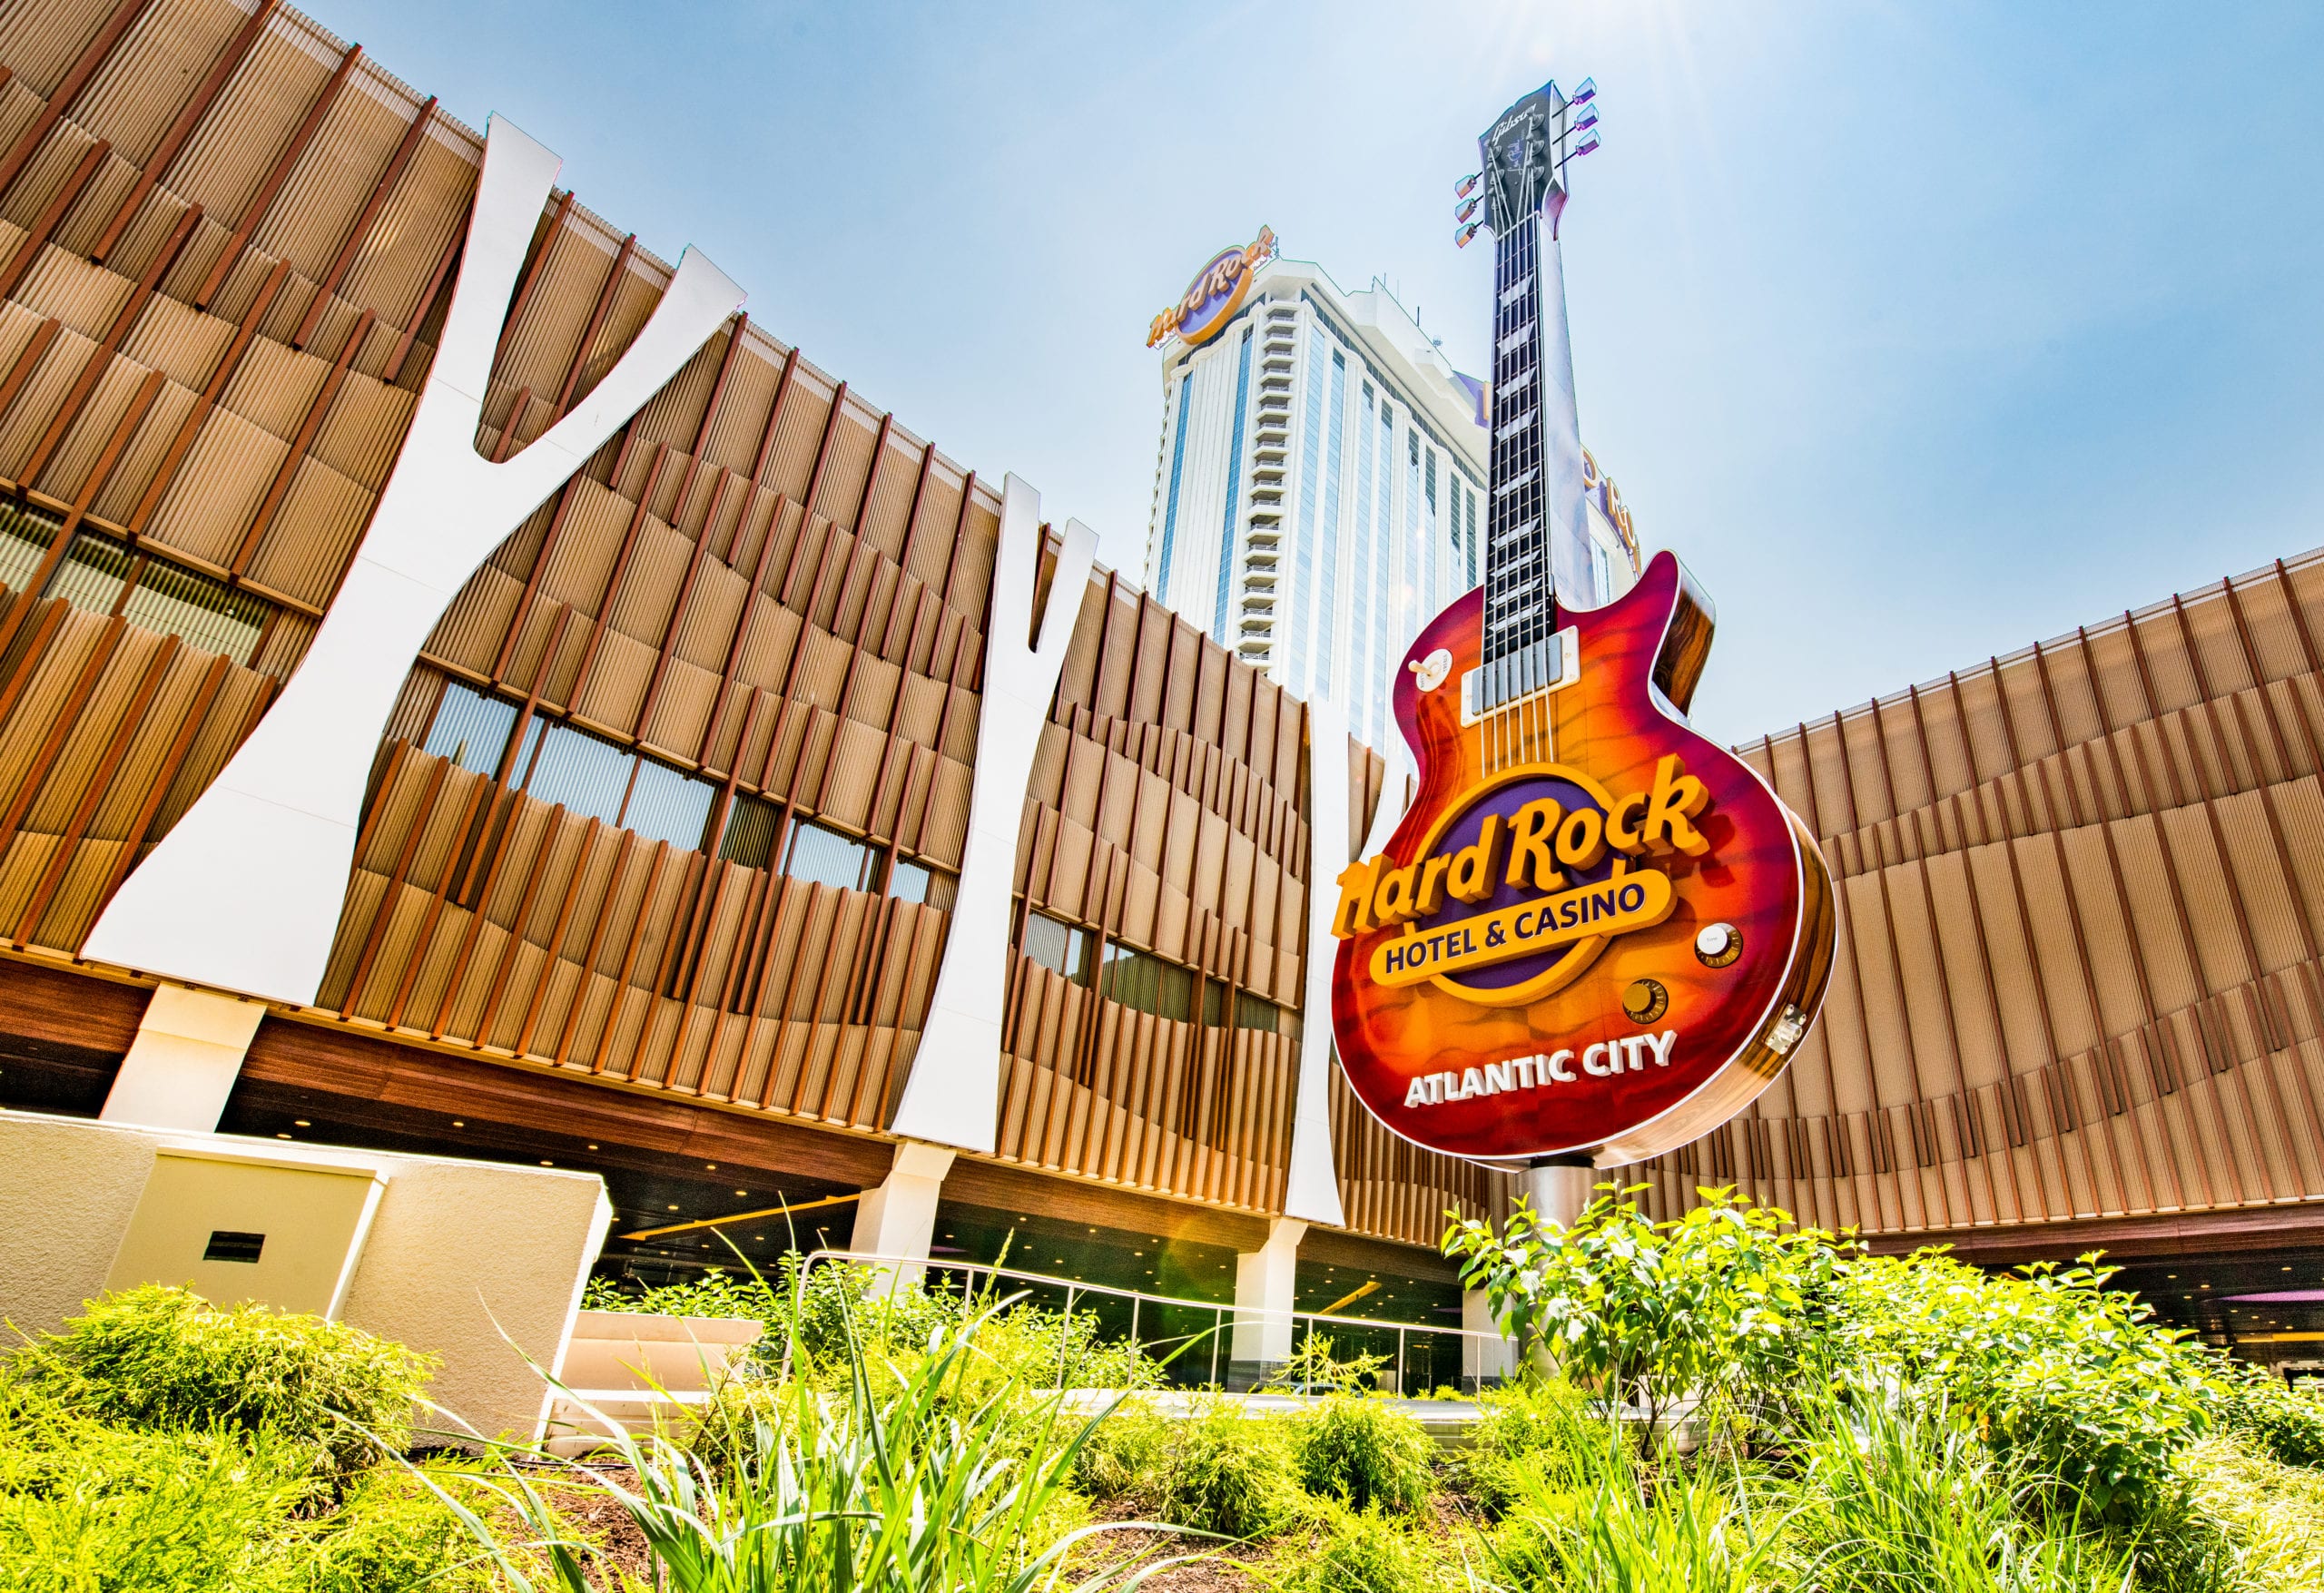 IU EDSA Hard Rock Hotel & Casino Atlantic City Closeup of guitar in courtyard